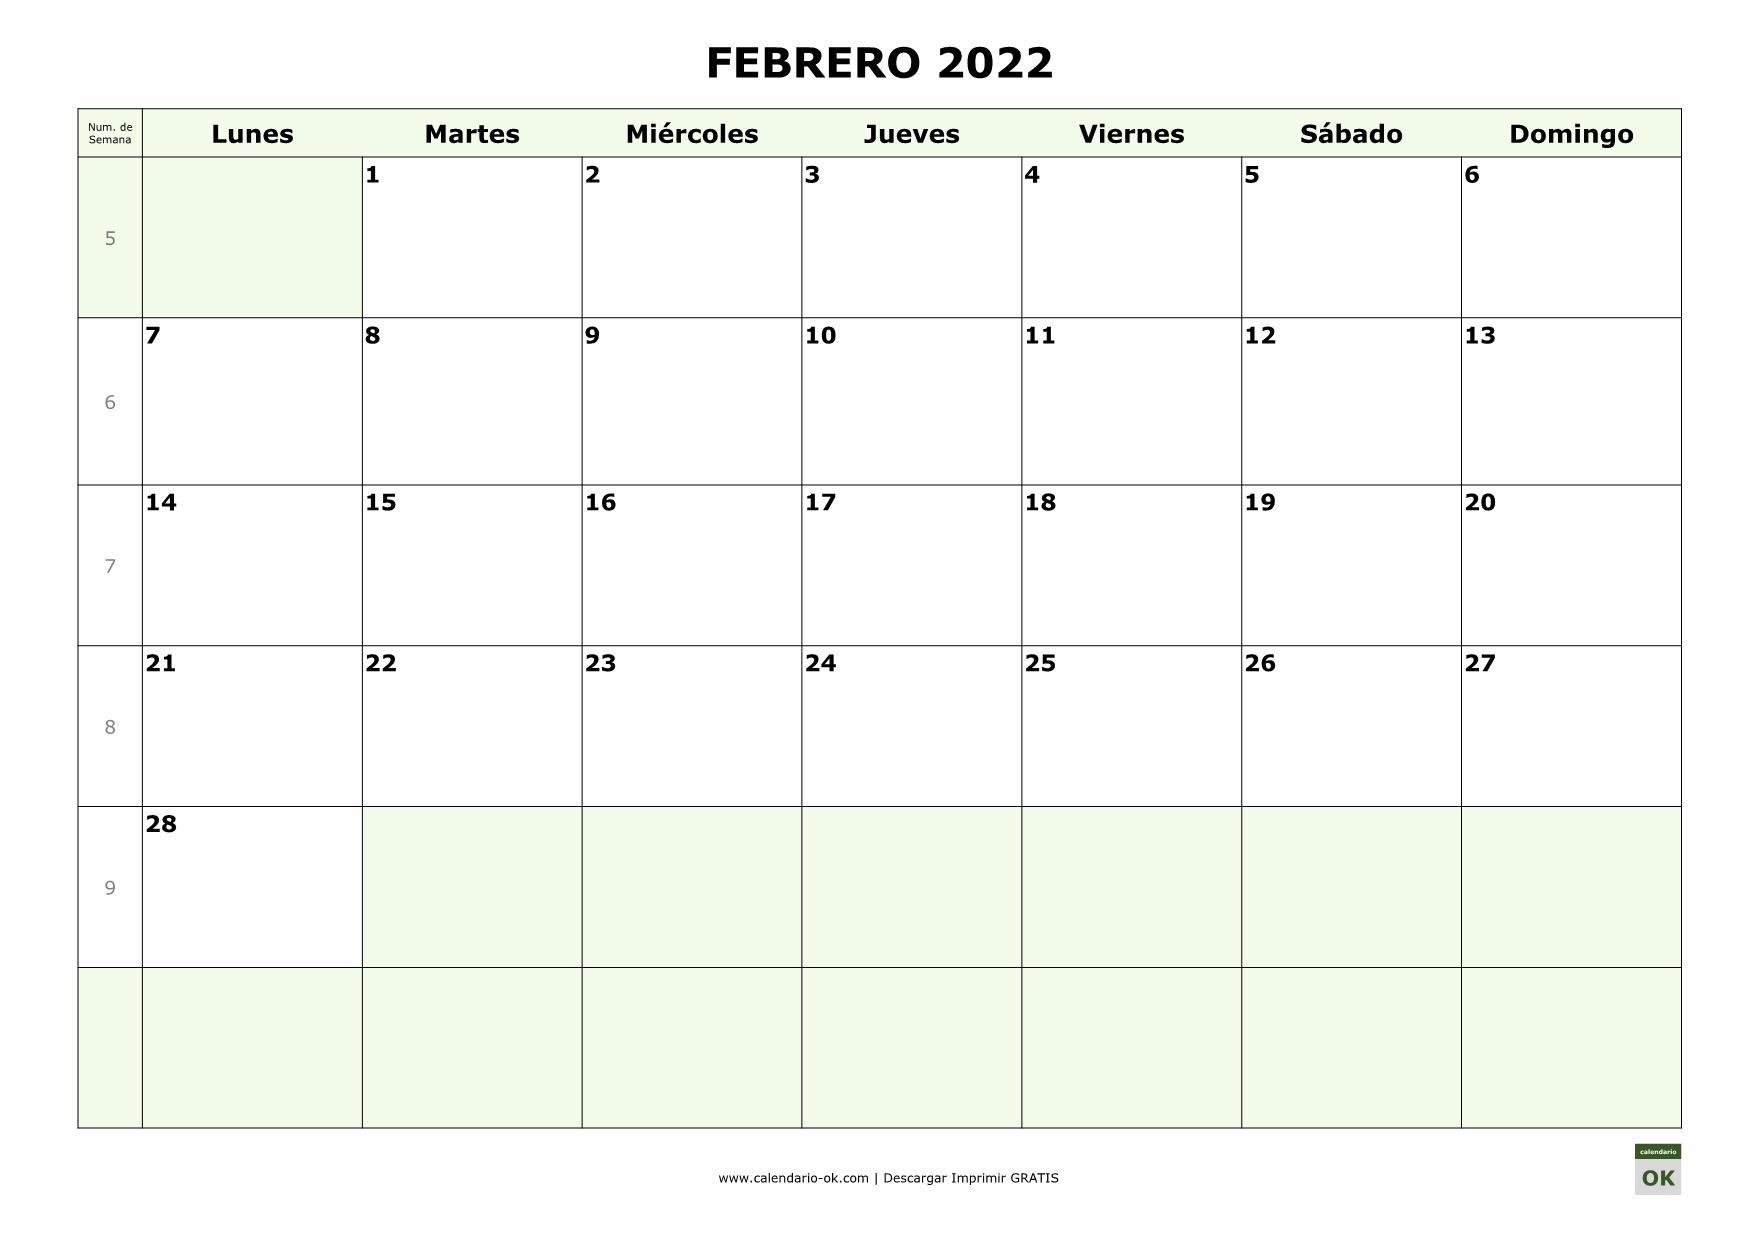 FEBRERO 2022 con Numero de Semana